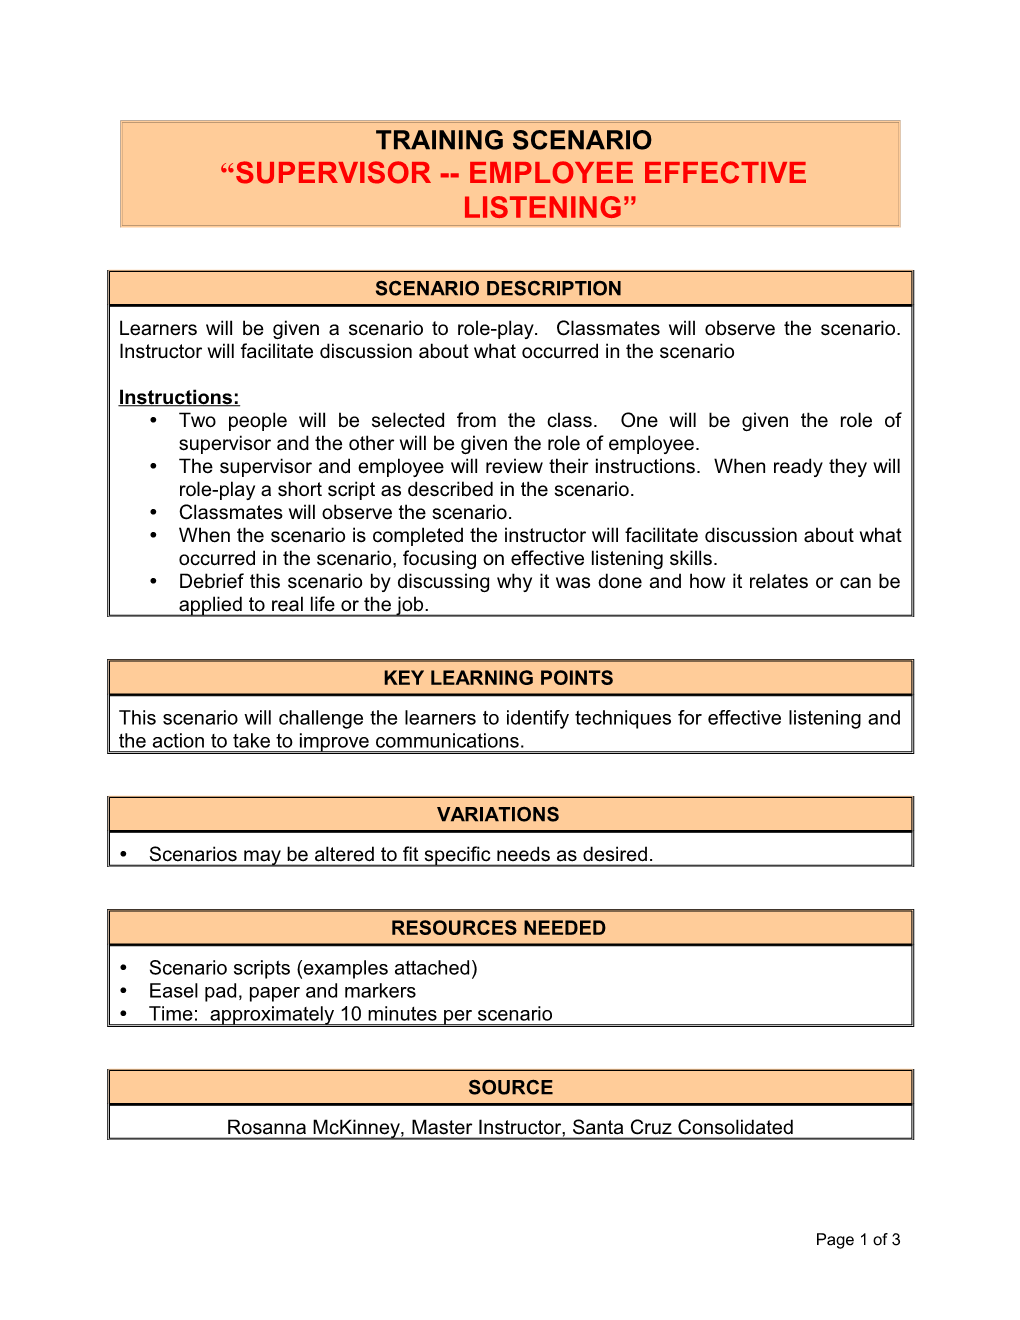 Supervisor Employee Effective Listening